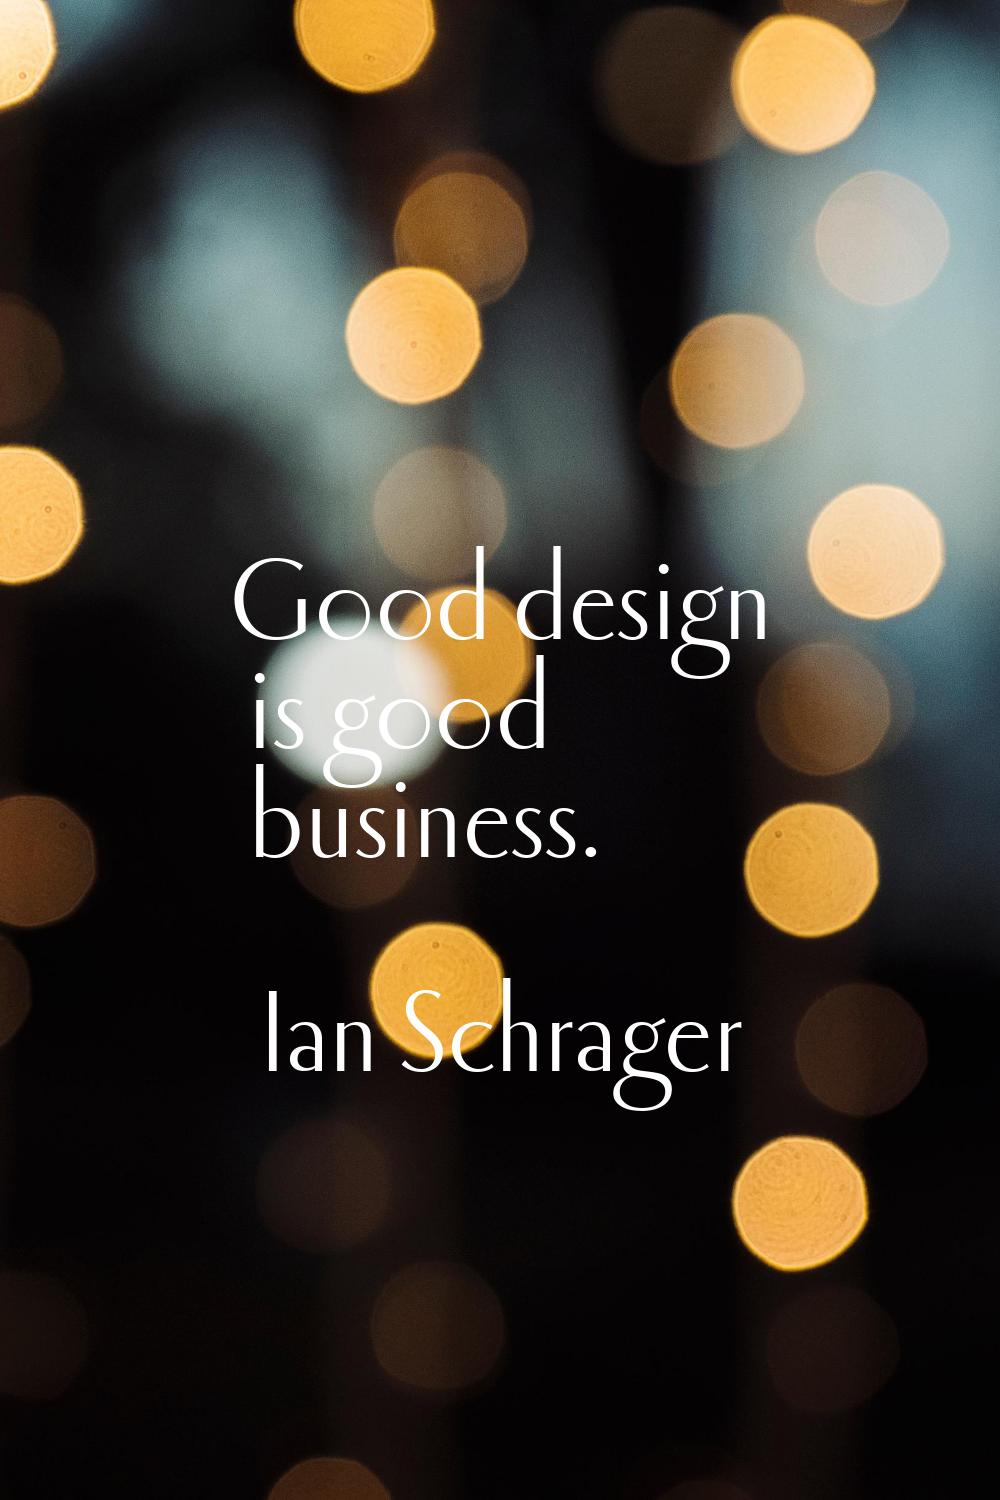 Good design is good business.